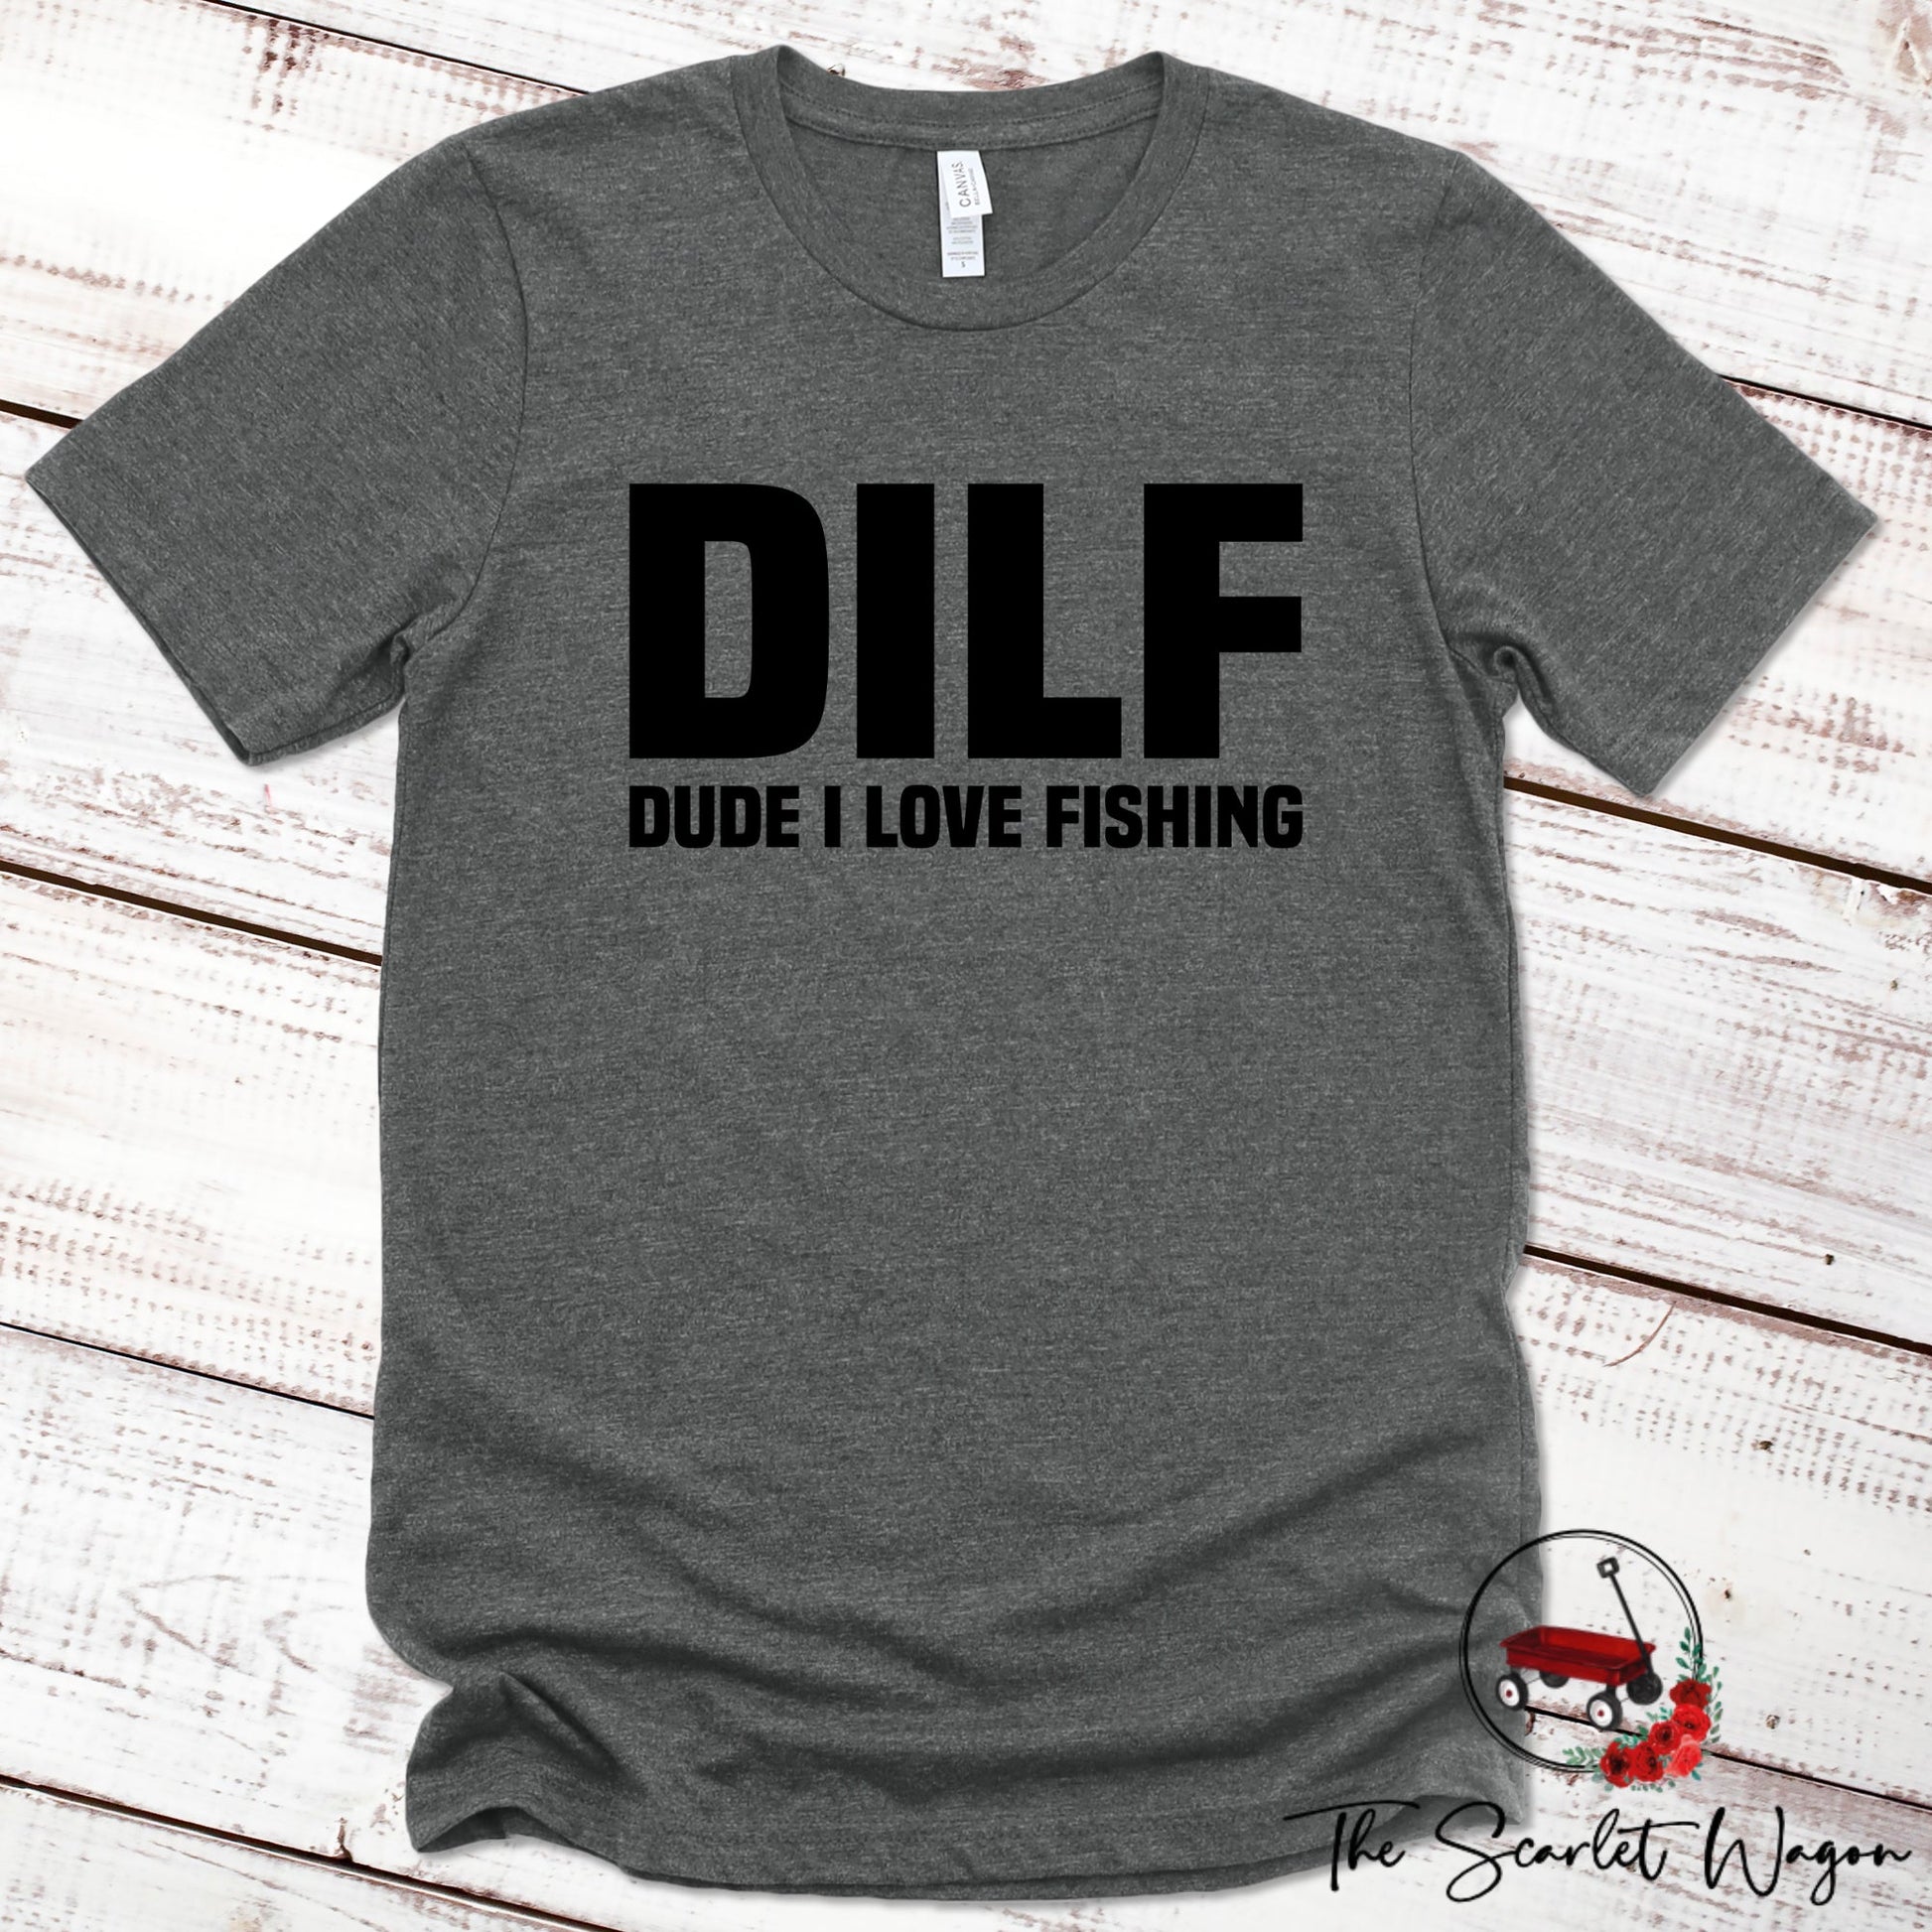 DILF - Dude I Love Fishing Premium Tee Scarlet Wagon Deep Heather Gray XS 